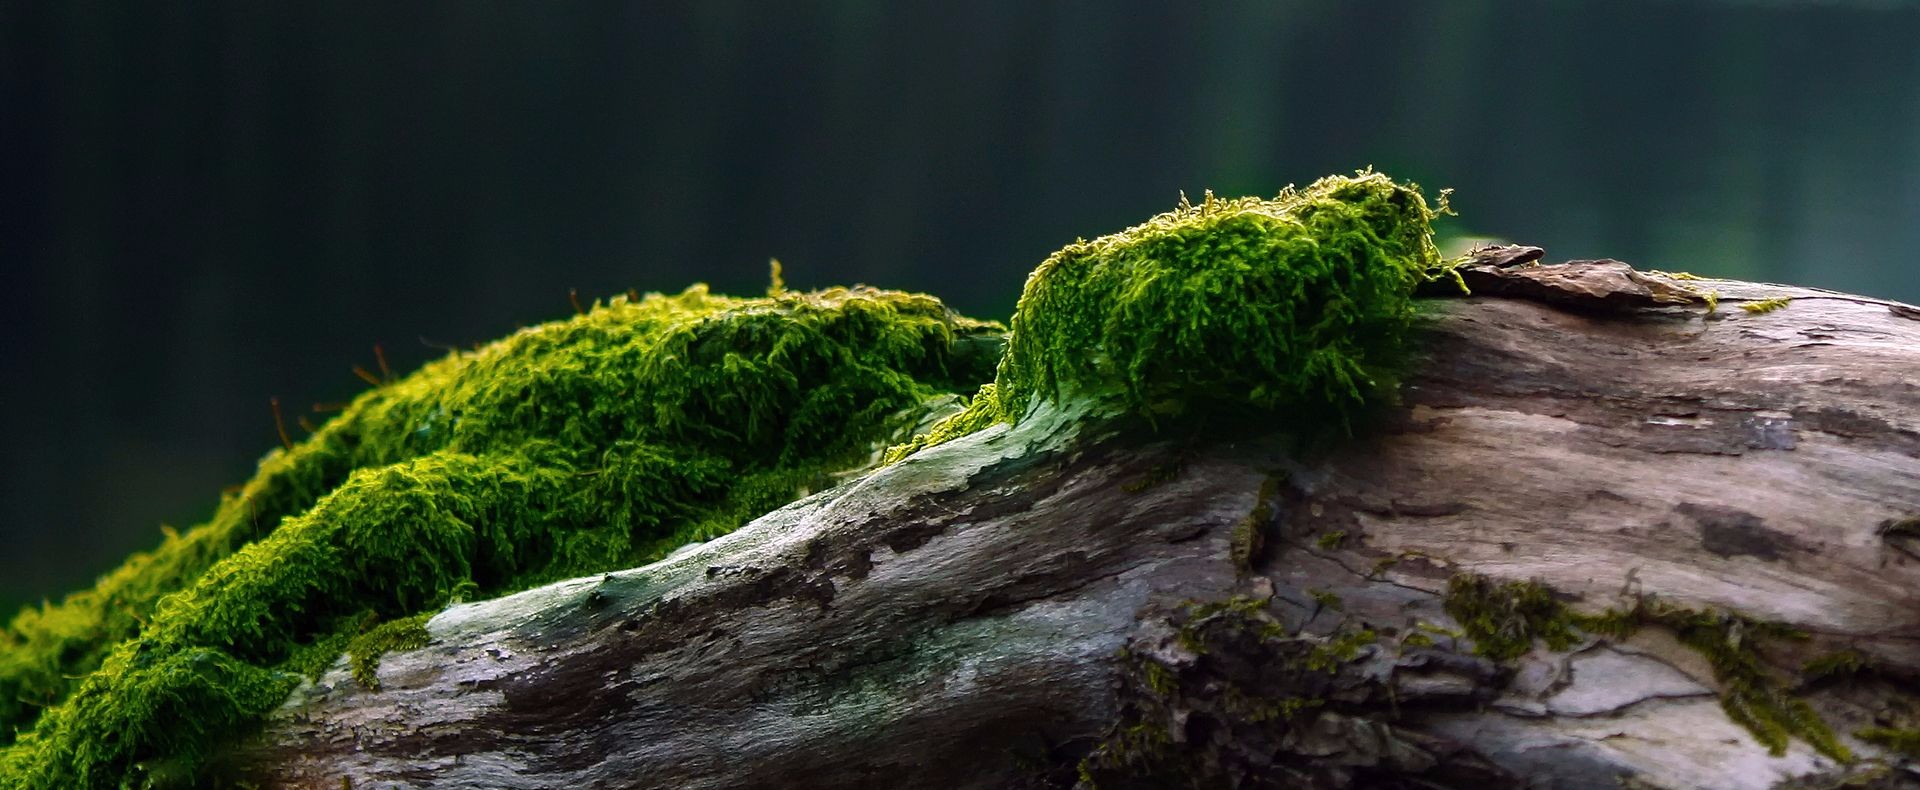 moss on log